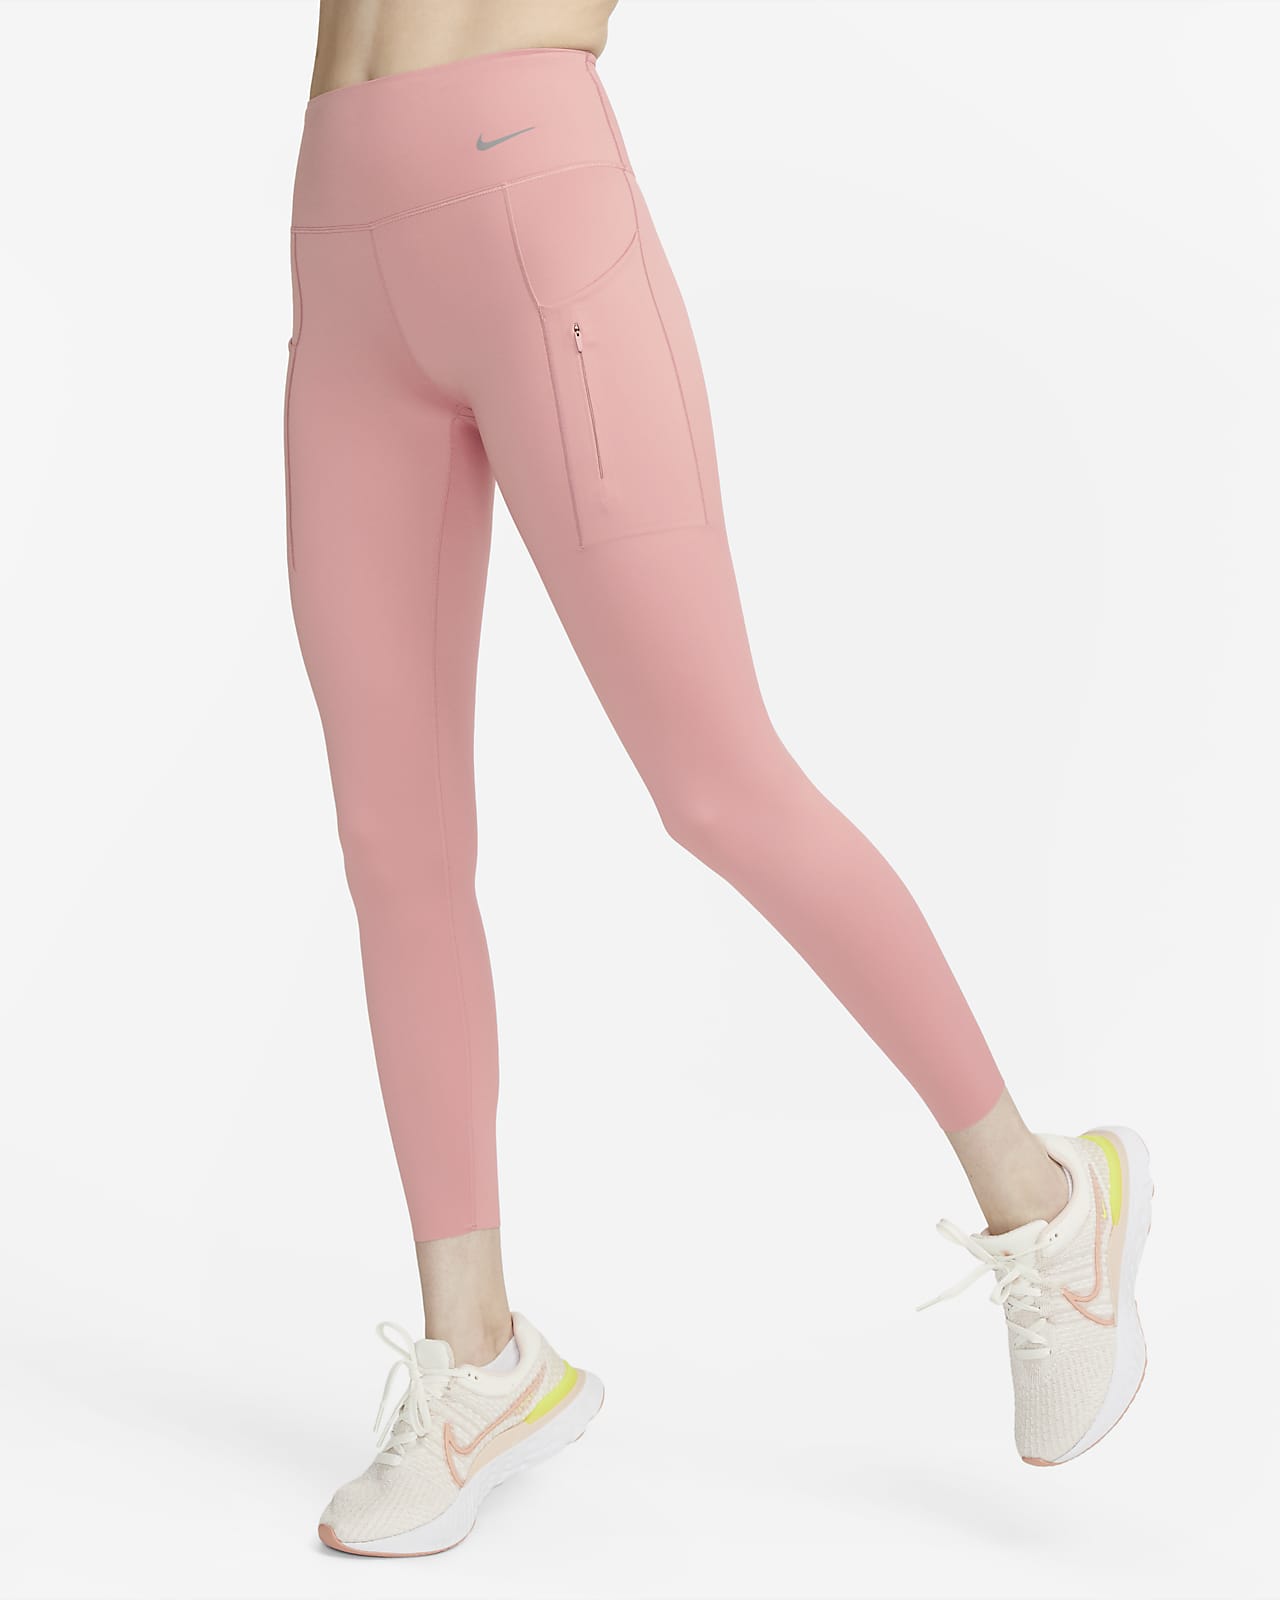 Nike Dri-Fit Go Firm-Support Mid-Rise 7/8 - Leggings Women's, Buy online